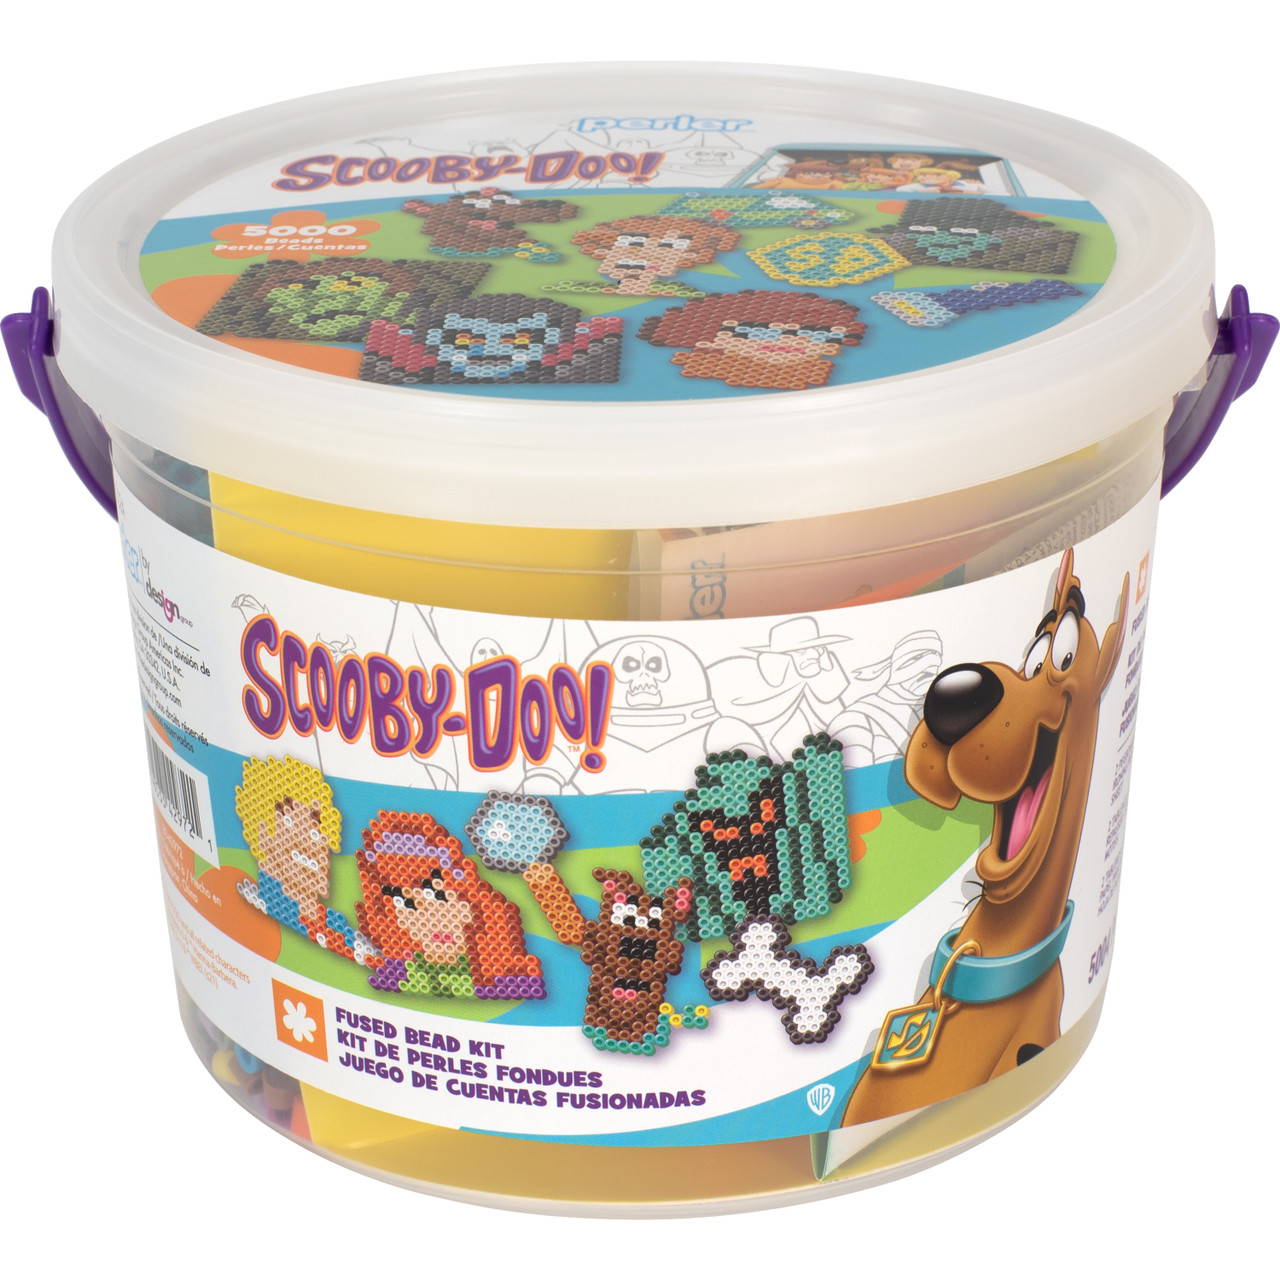 Scooby-Doo! Activity Bucket